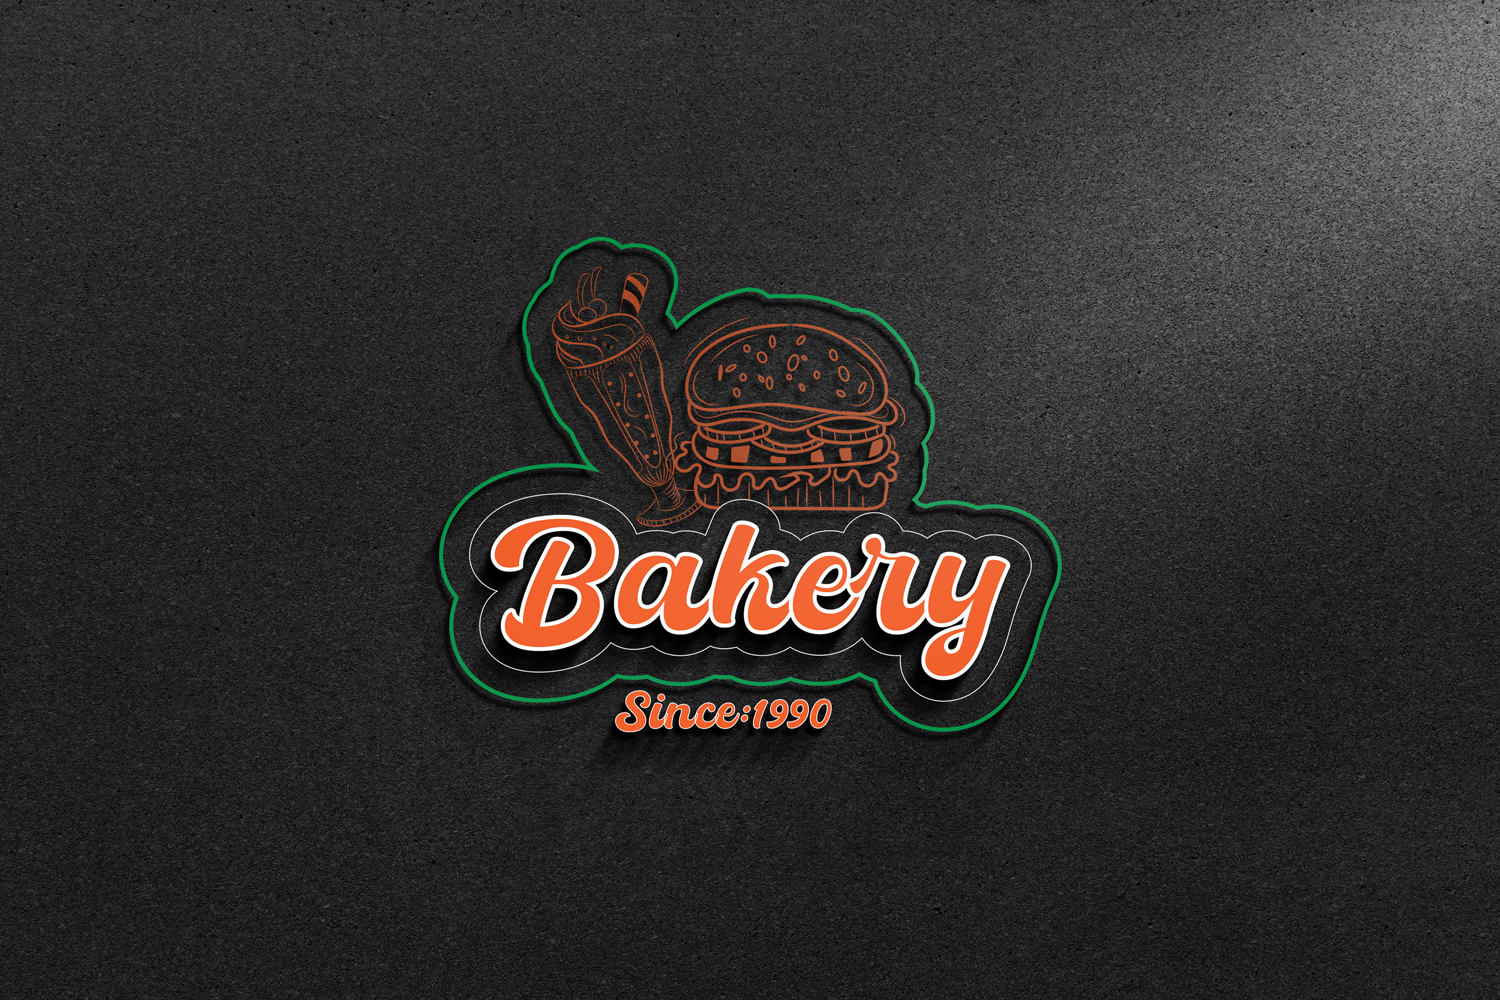 Bakery Logo Template-Bakery Shop Logo-Modern Bakery Logo...14